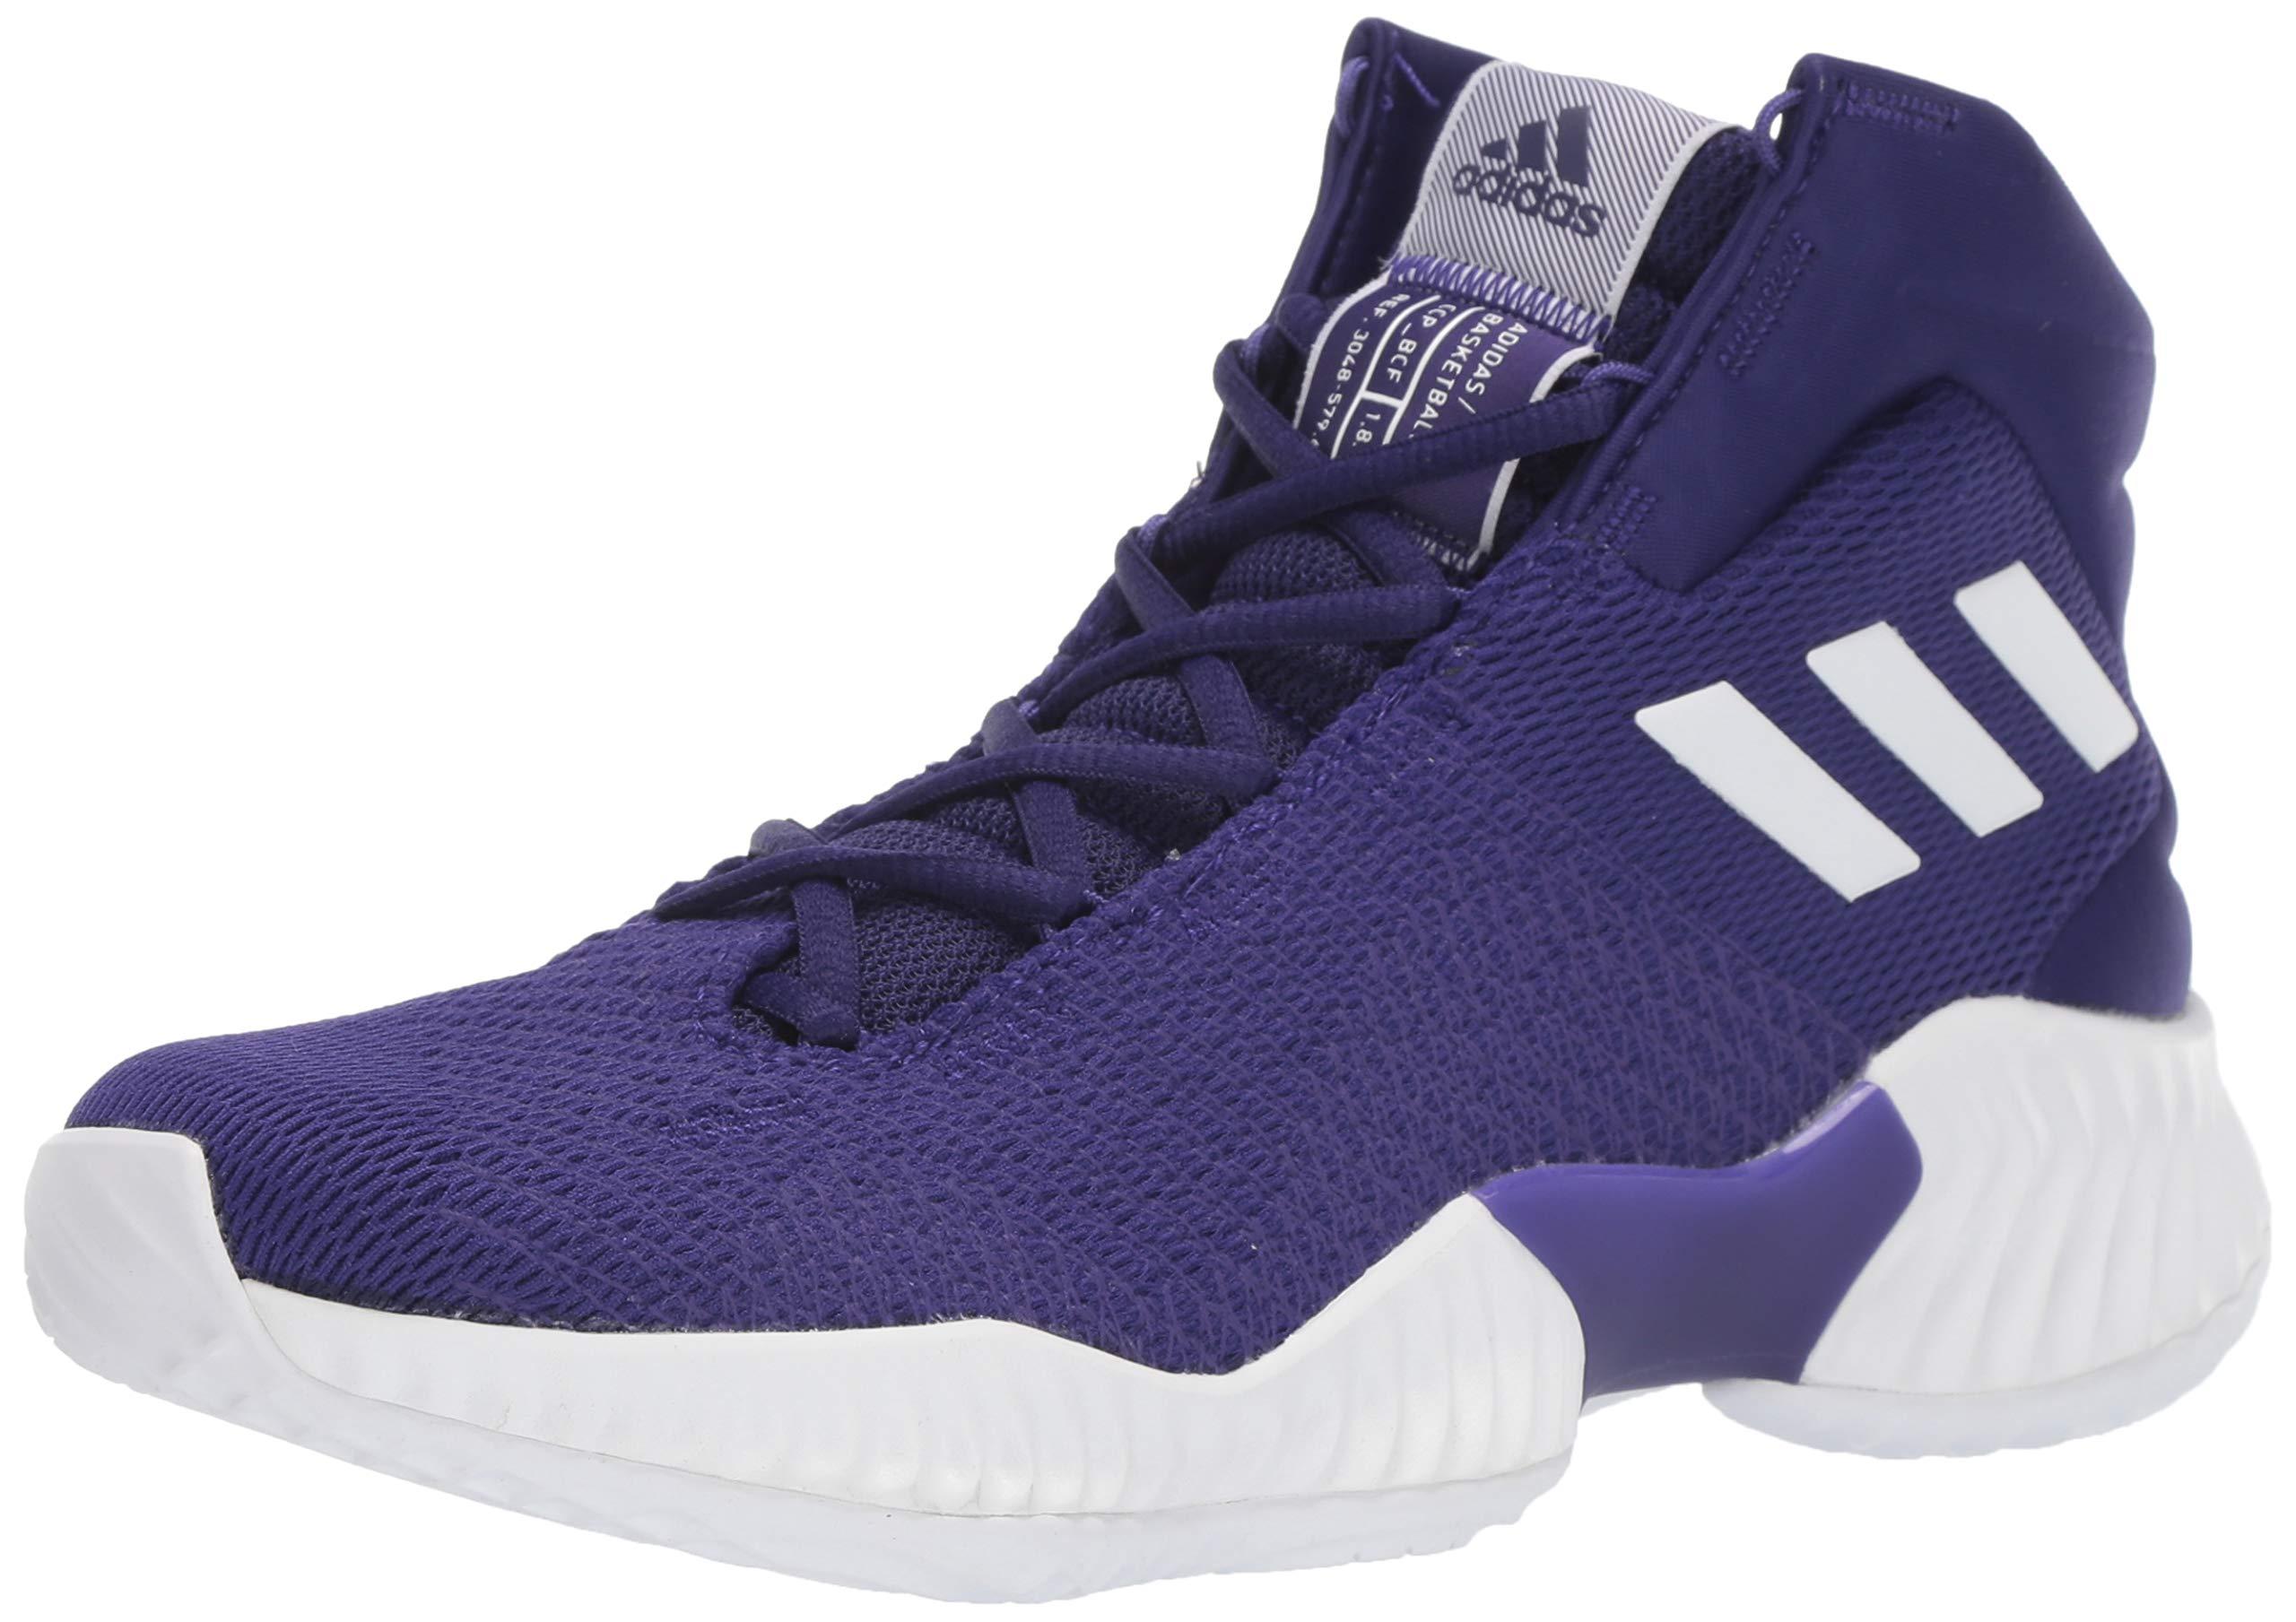 adidas Rubber Pro Bounce 2018 Basketball Shoe in Purple for Men - Lyst